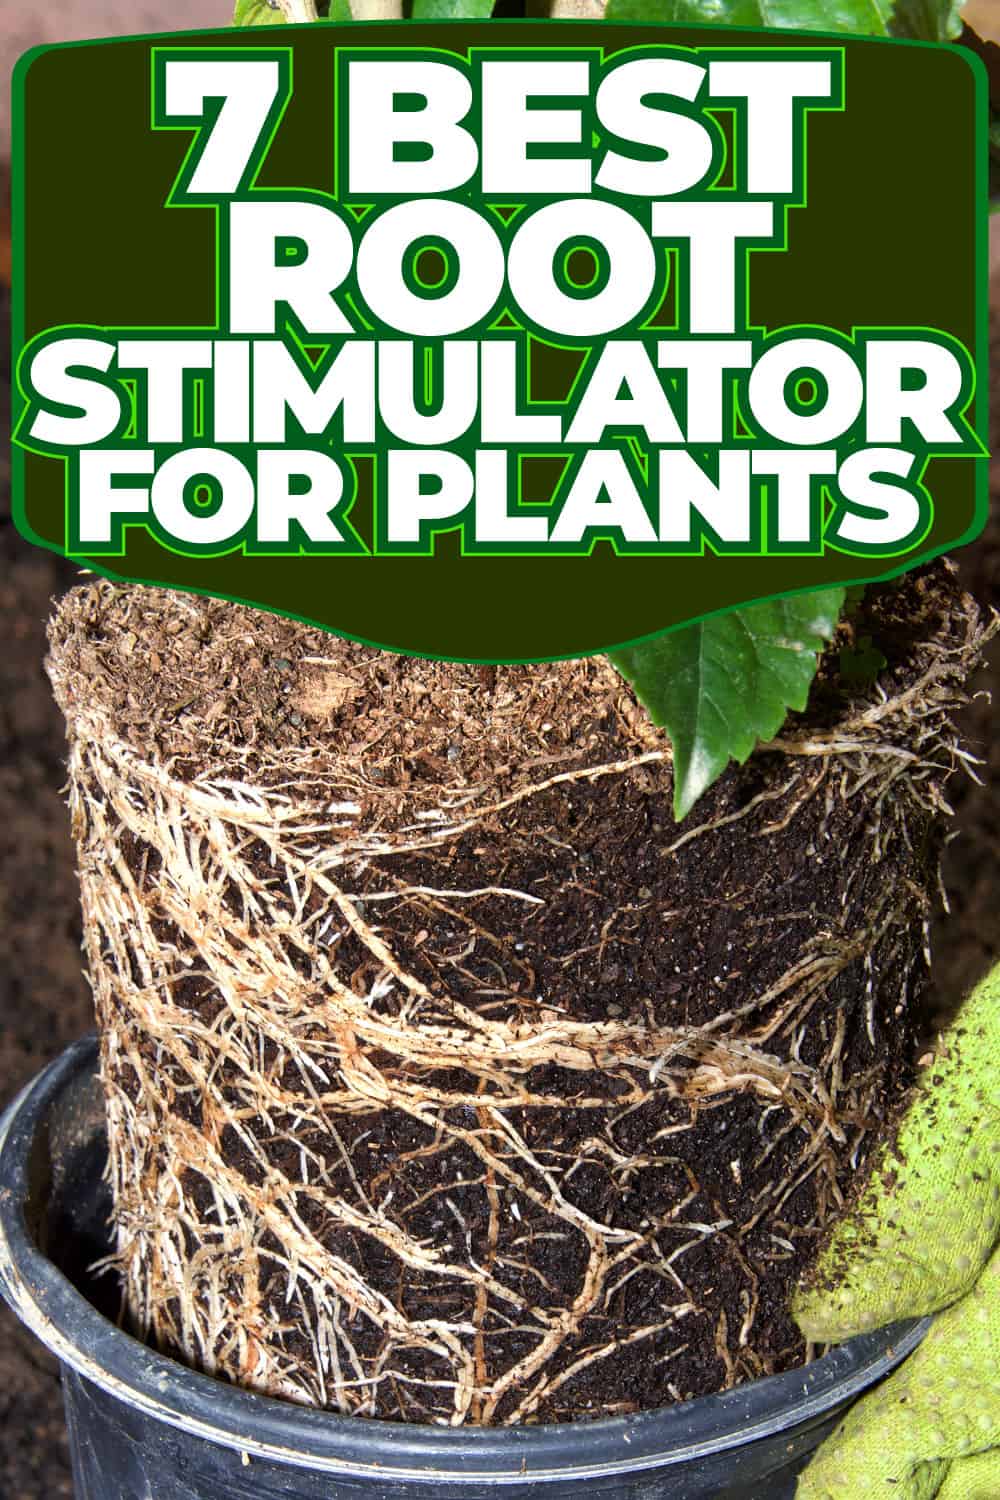 7 Best Root Stimulators For Plants